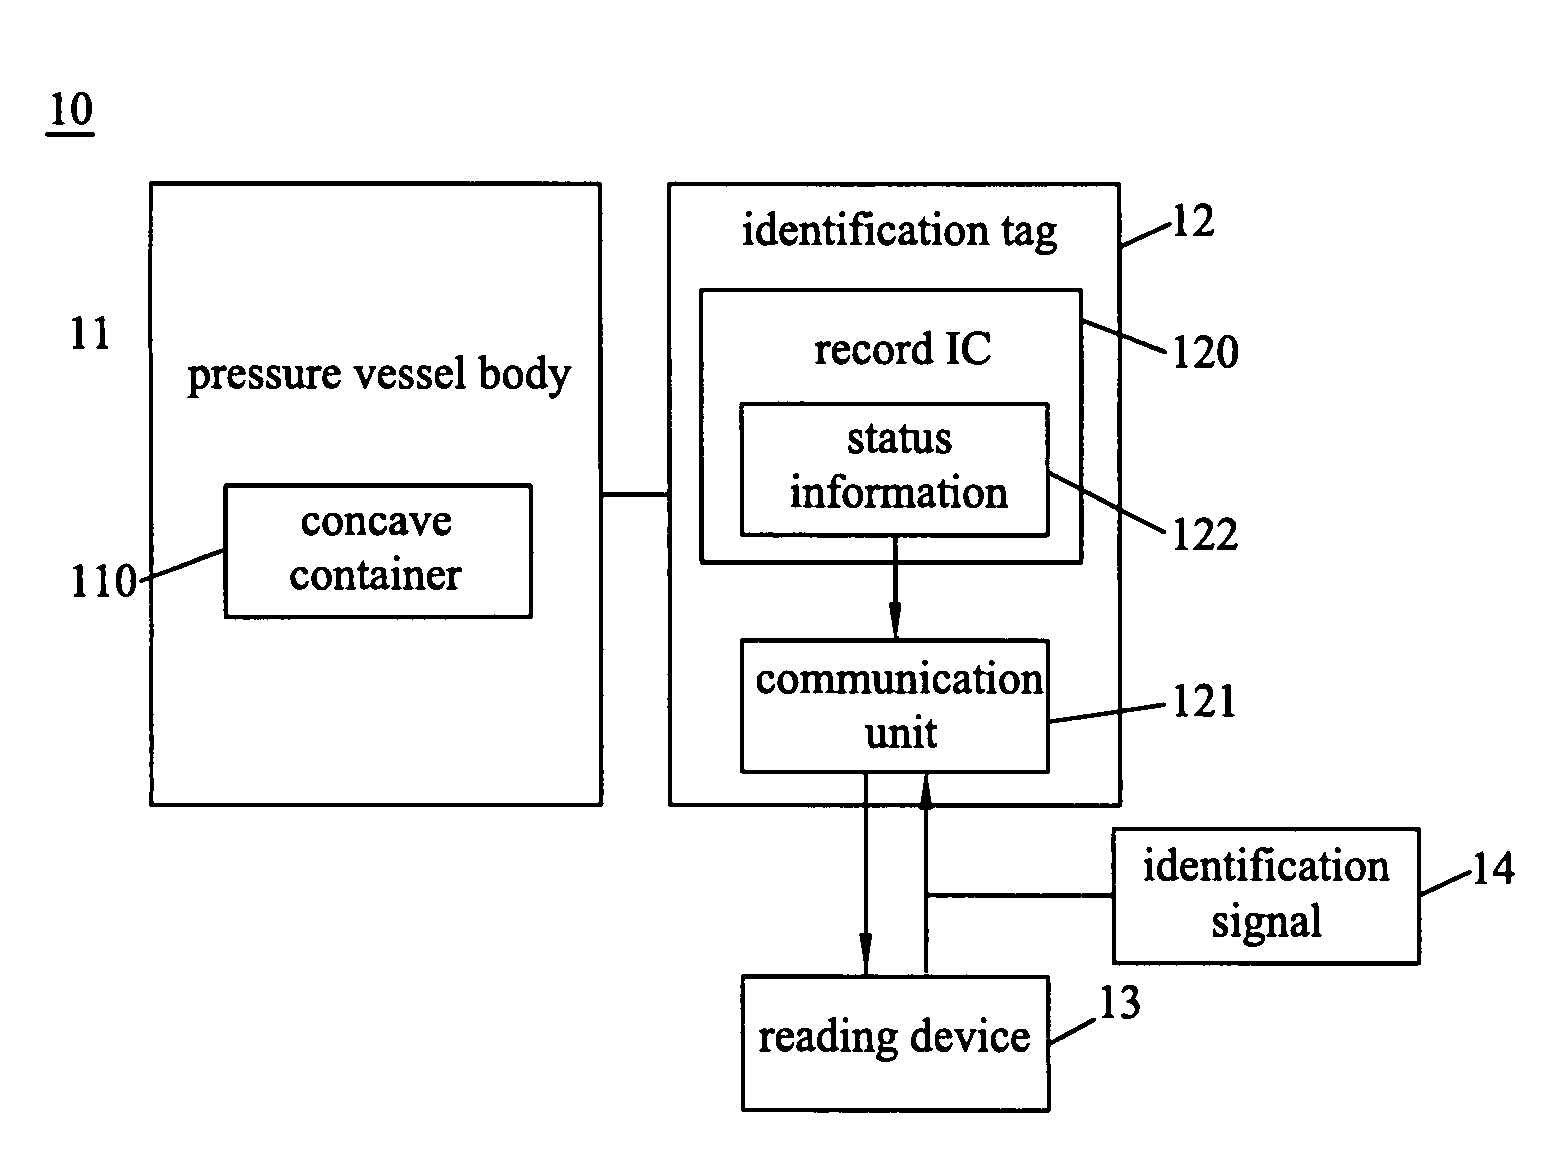 Pressure vessel apparatus with sensing identification function